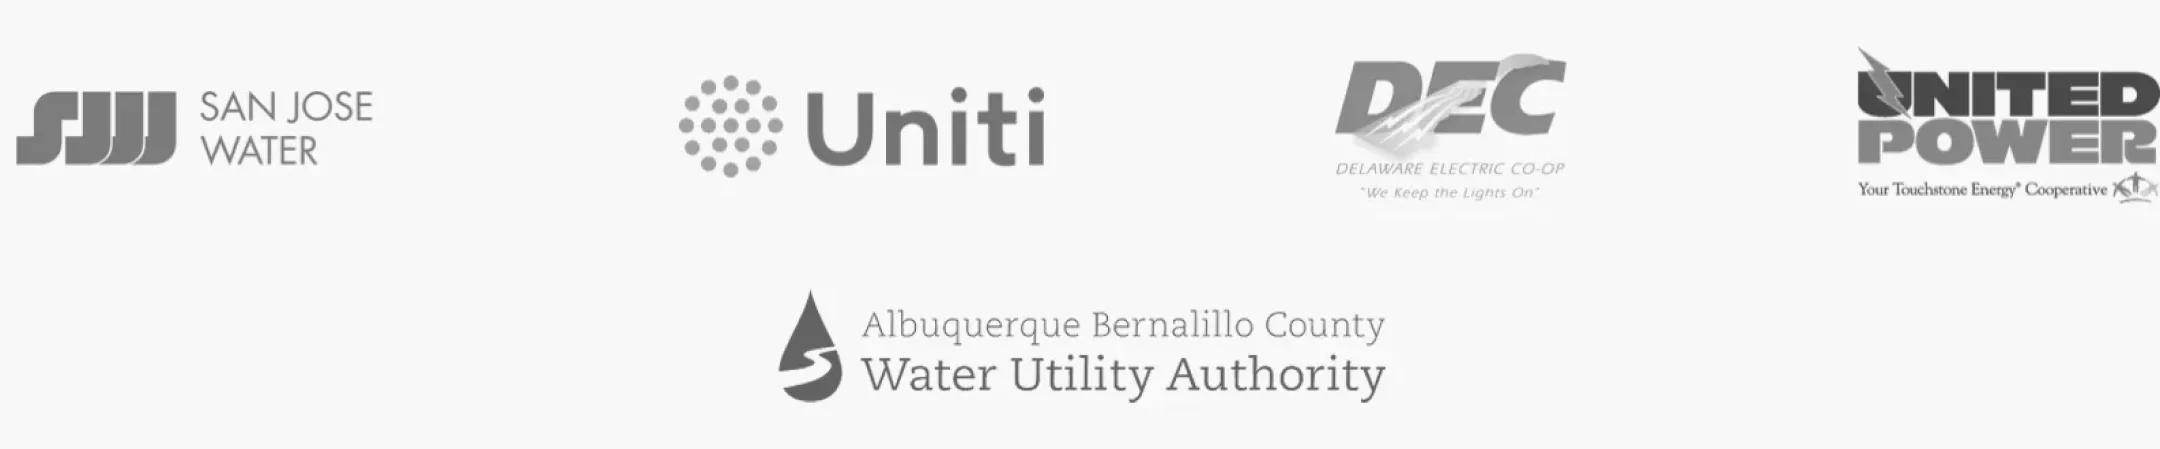 Uniti Fiber, United Power, San Jose Water Company, Delaware Electric Co-Op, Uniti Fiber